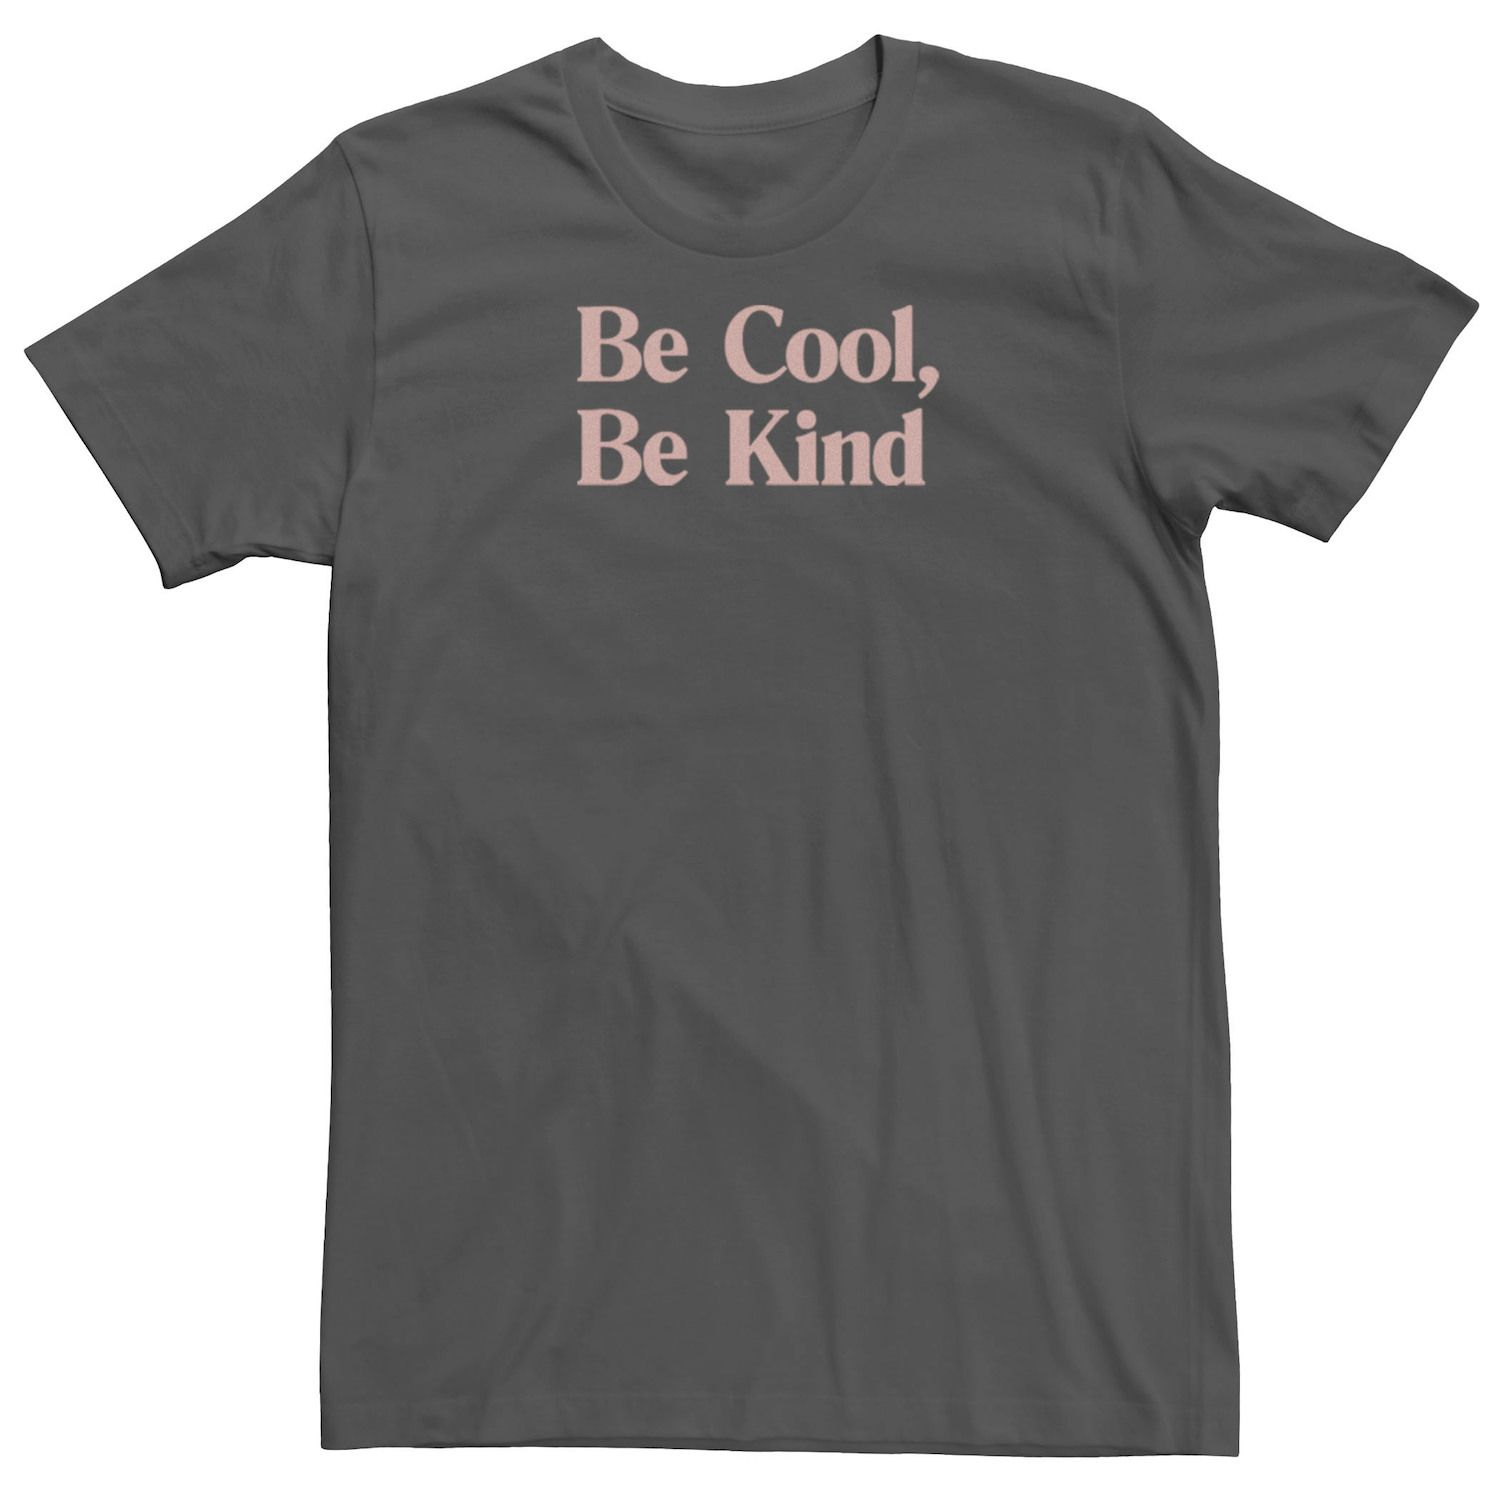 Мужская футболка с надписью Fifth Sun Be Cool Be Kind Licensed Character мужская футболка be kind s зеленый